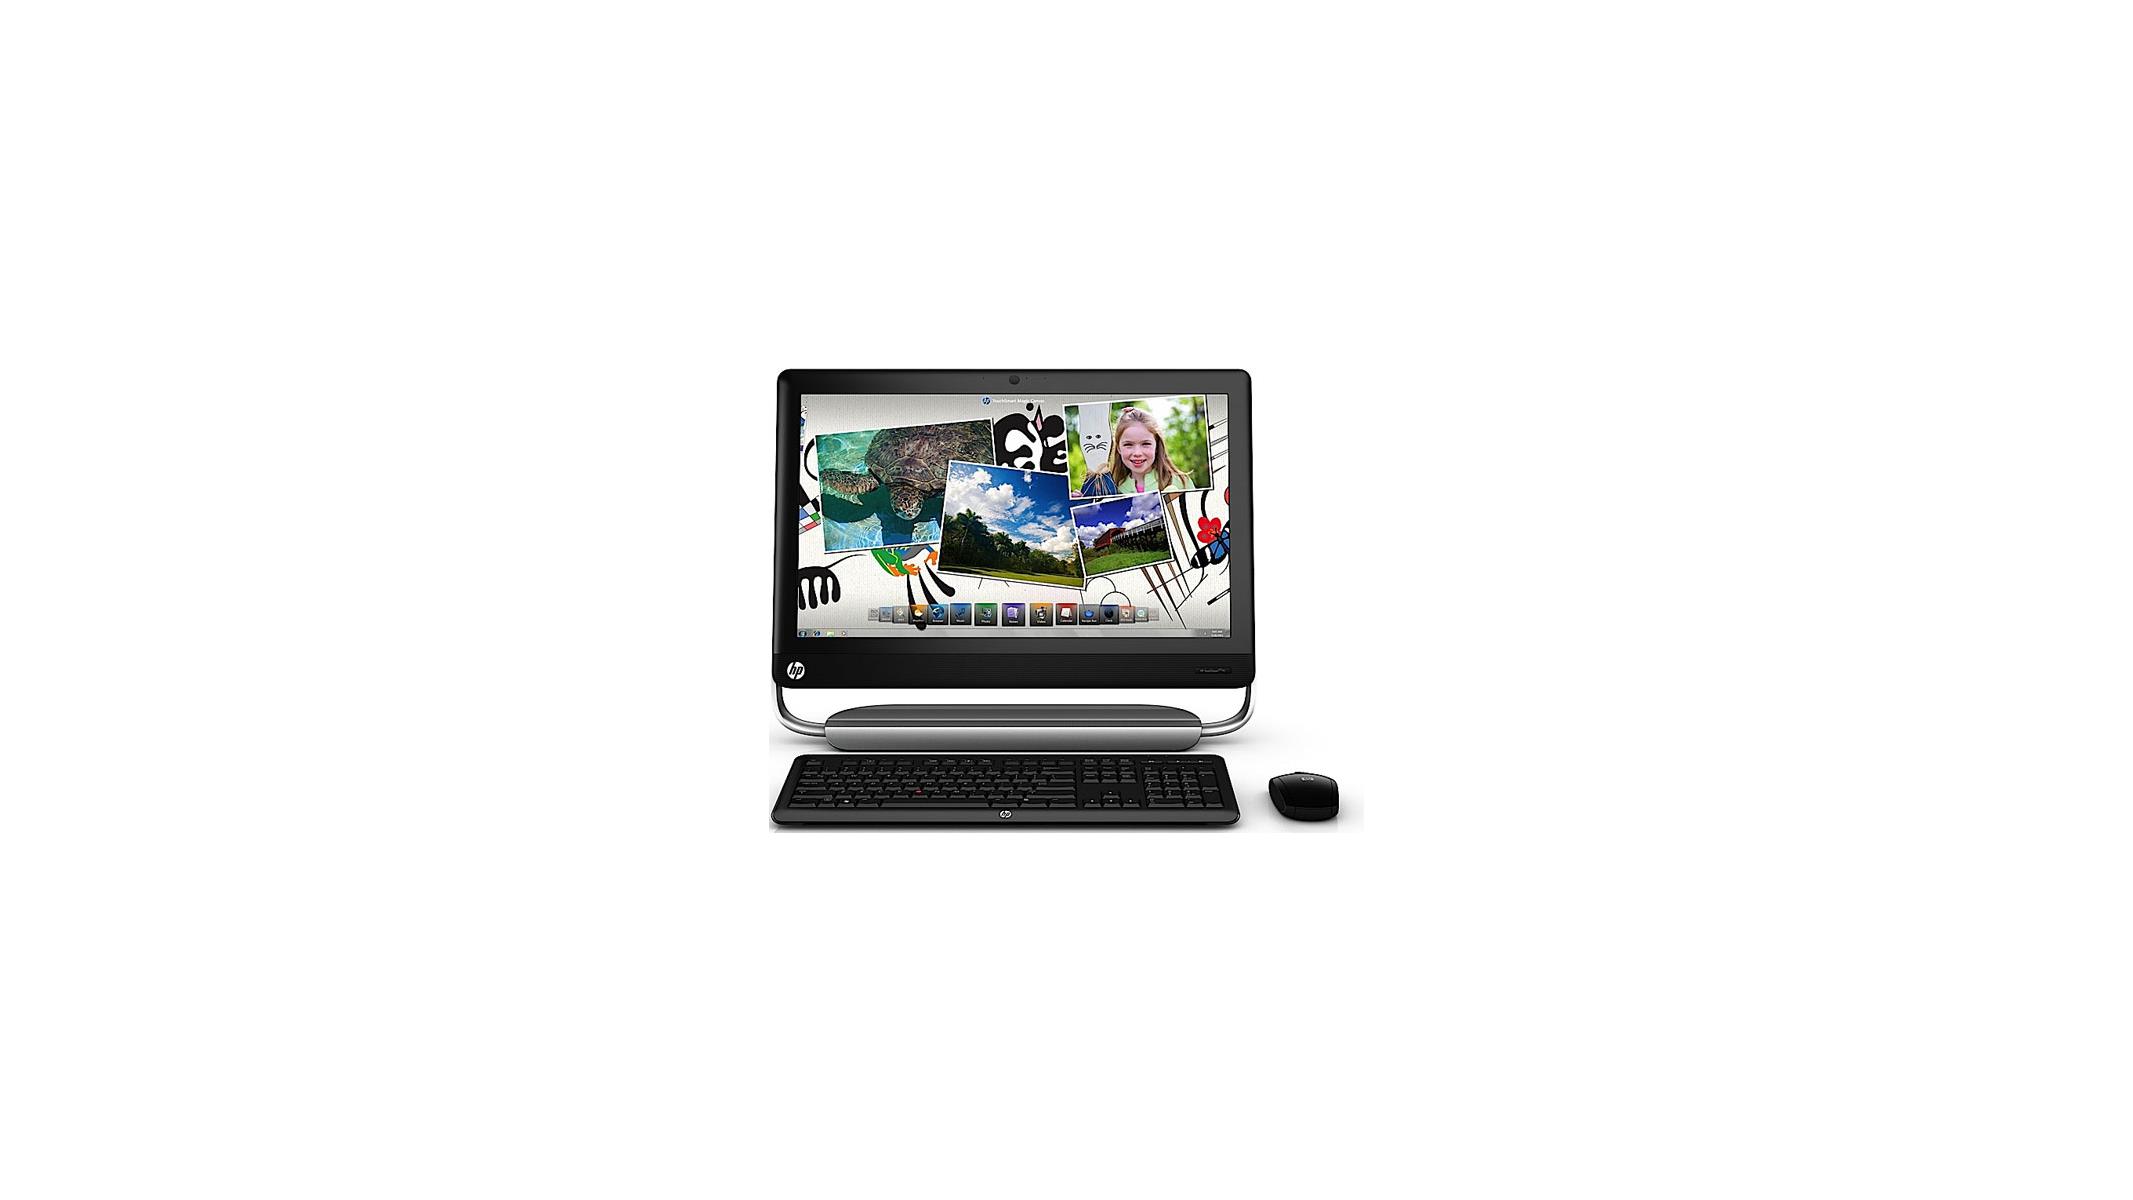 TouchSmart 420-1100 Desktop PC series